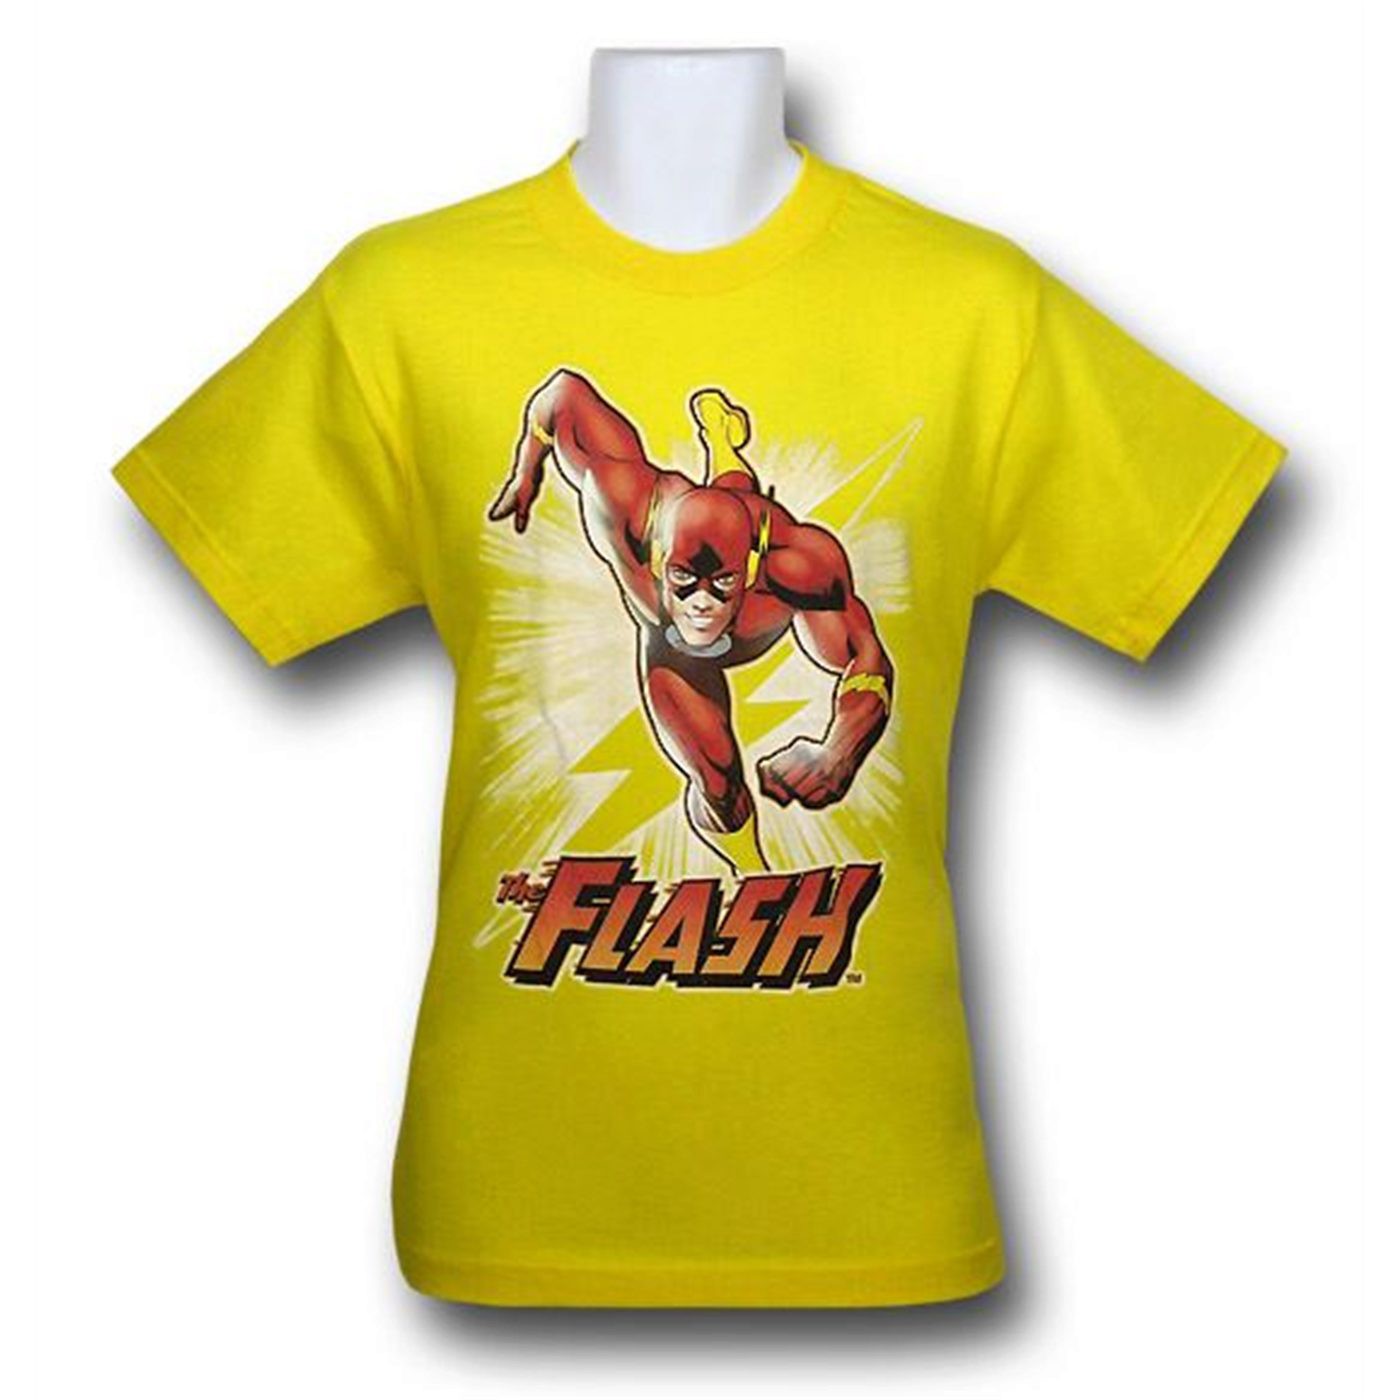 Flash Bolt Burst Yellow Kids T-Shirt